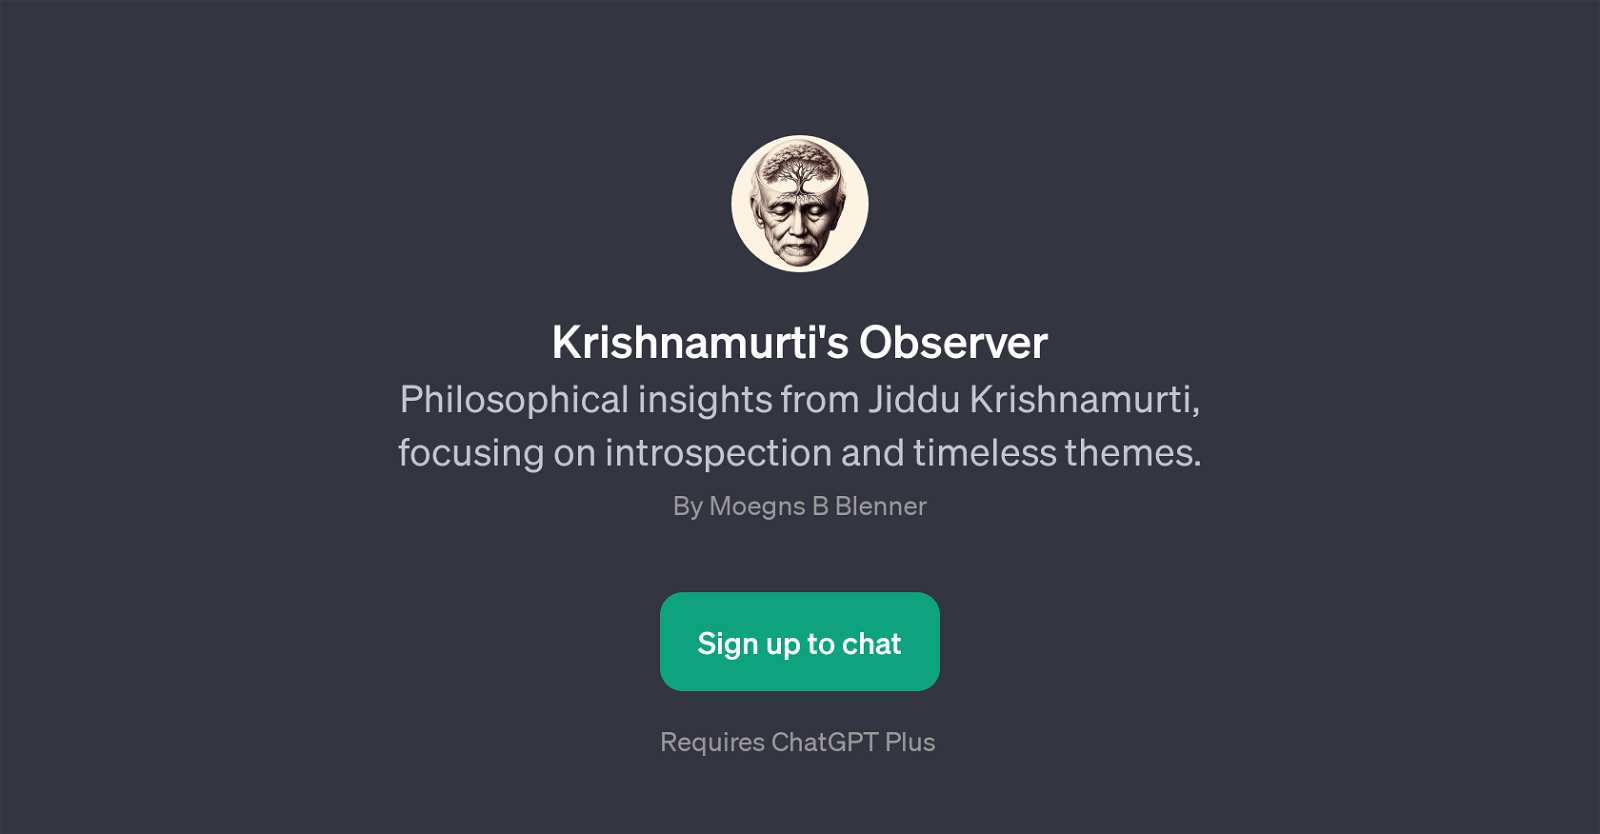 Krishnamurti's Observer website